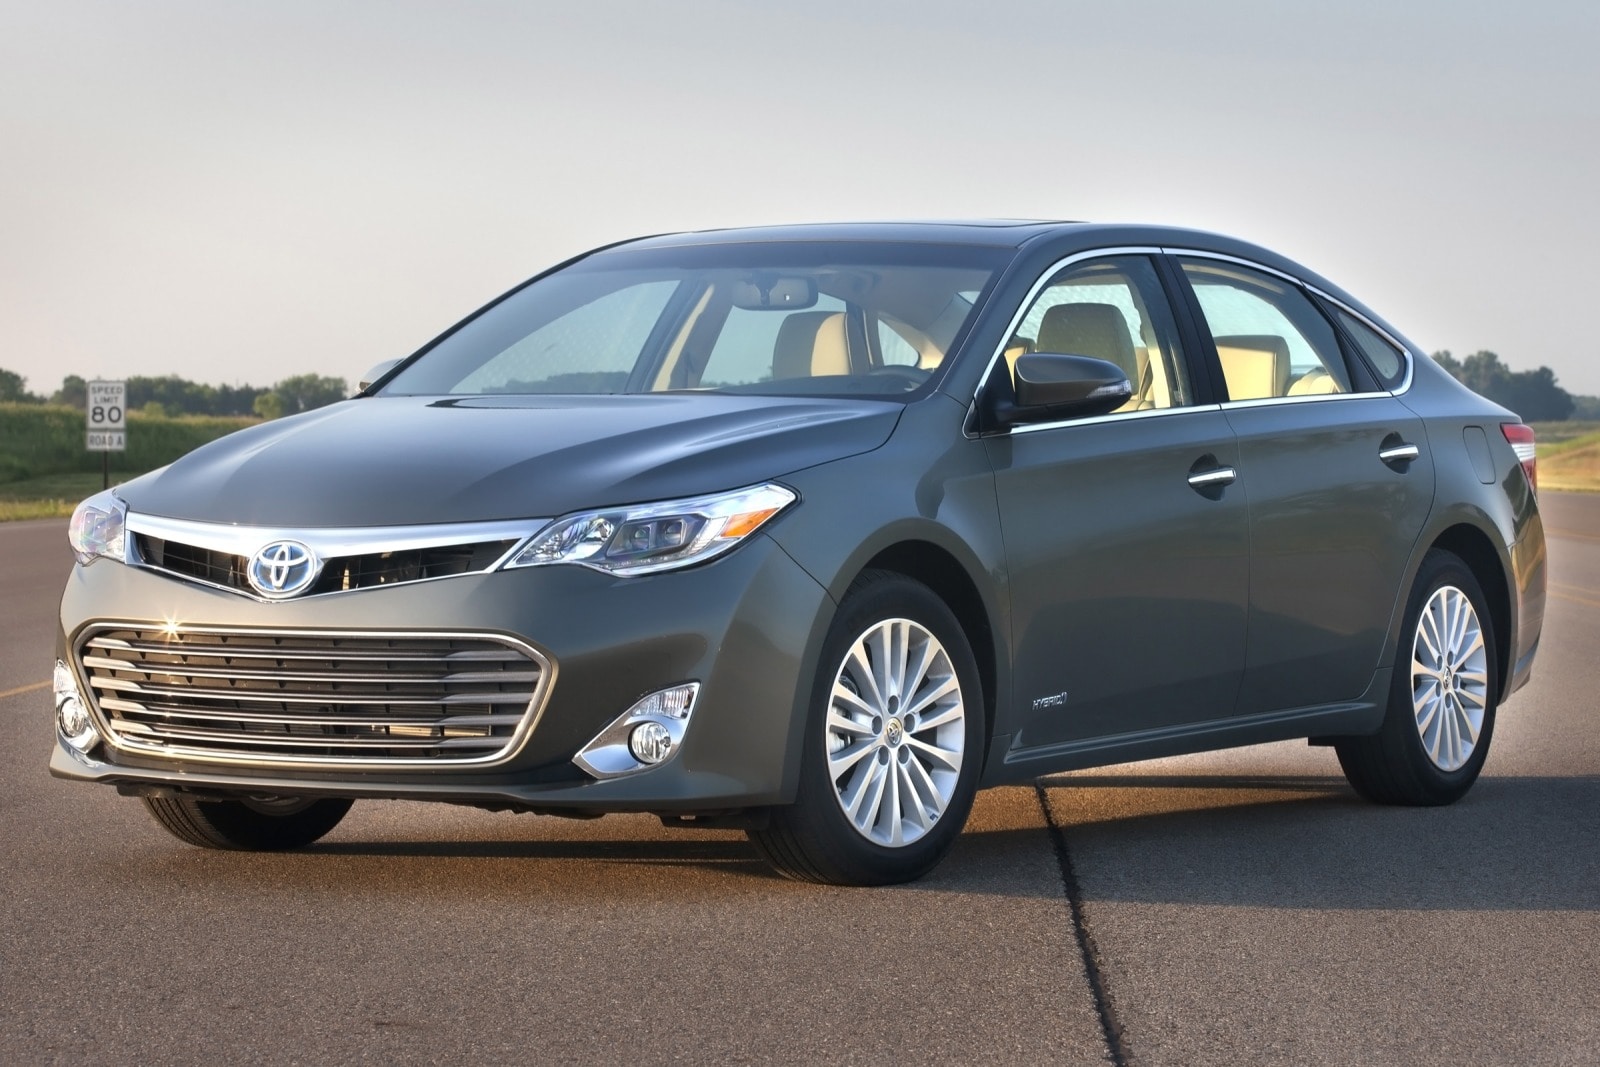 2013 Toyota Avalon Hybrid Review & Ratings | Edmunds